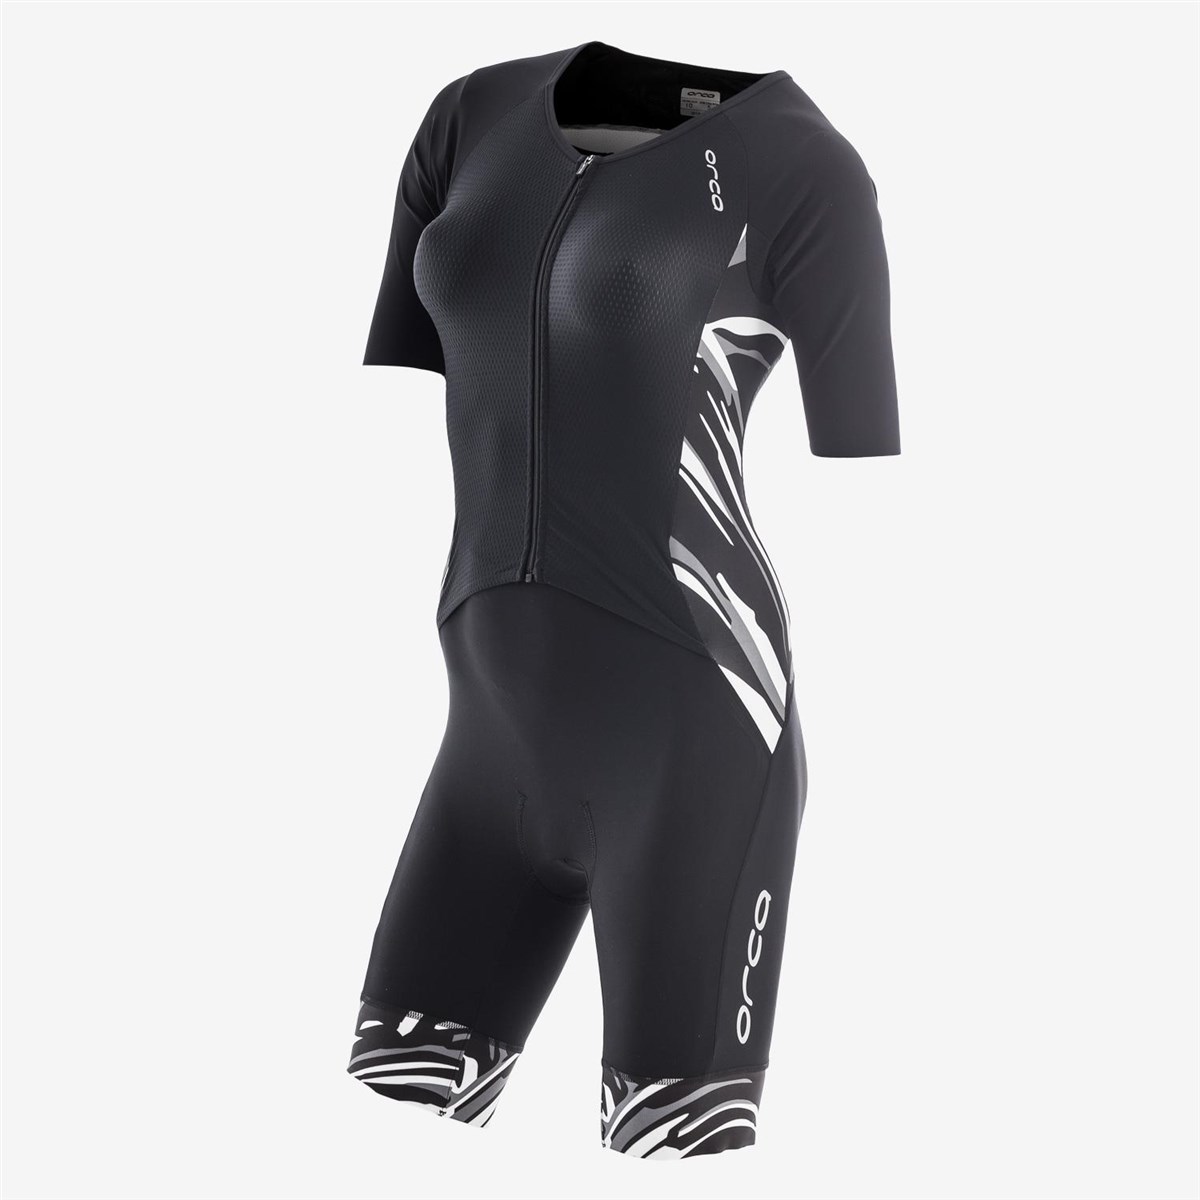 Orca Womens 226 Komp Short Sleeve Race Suit product image